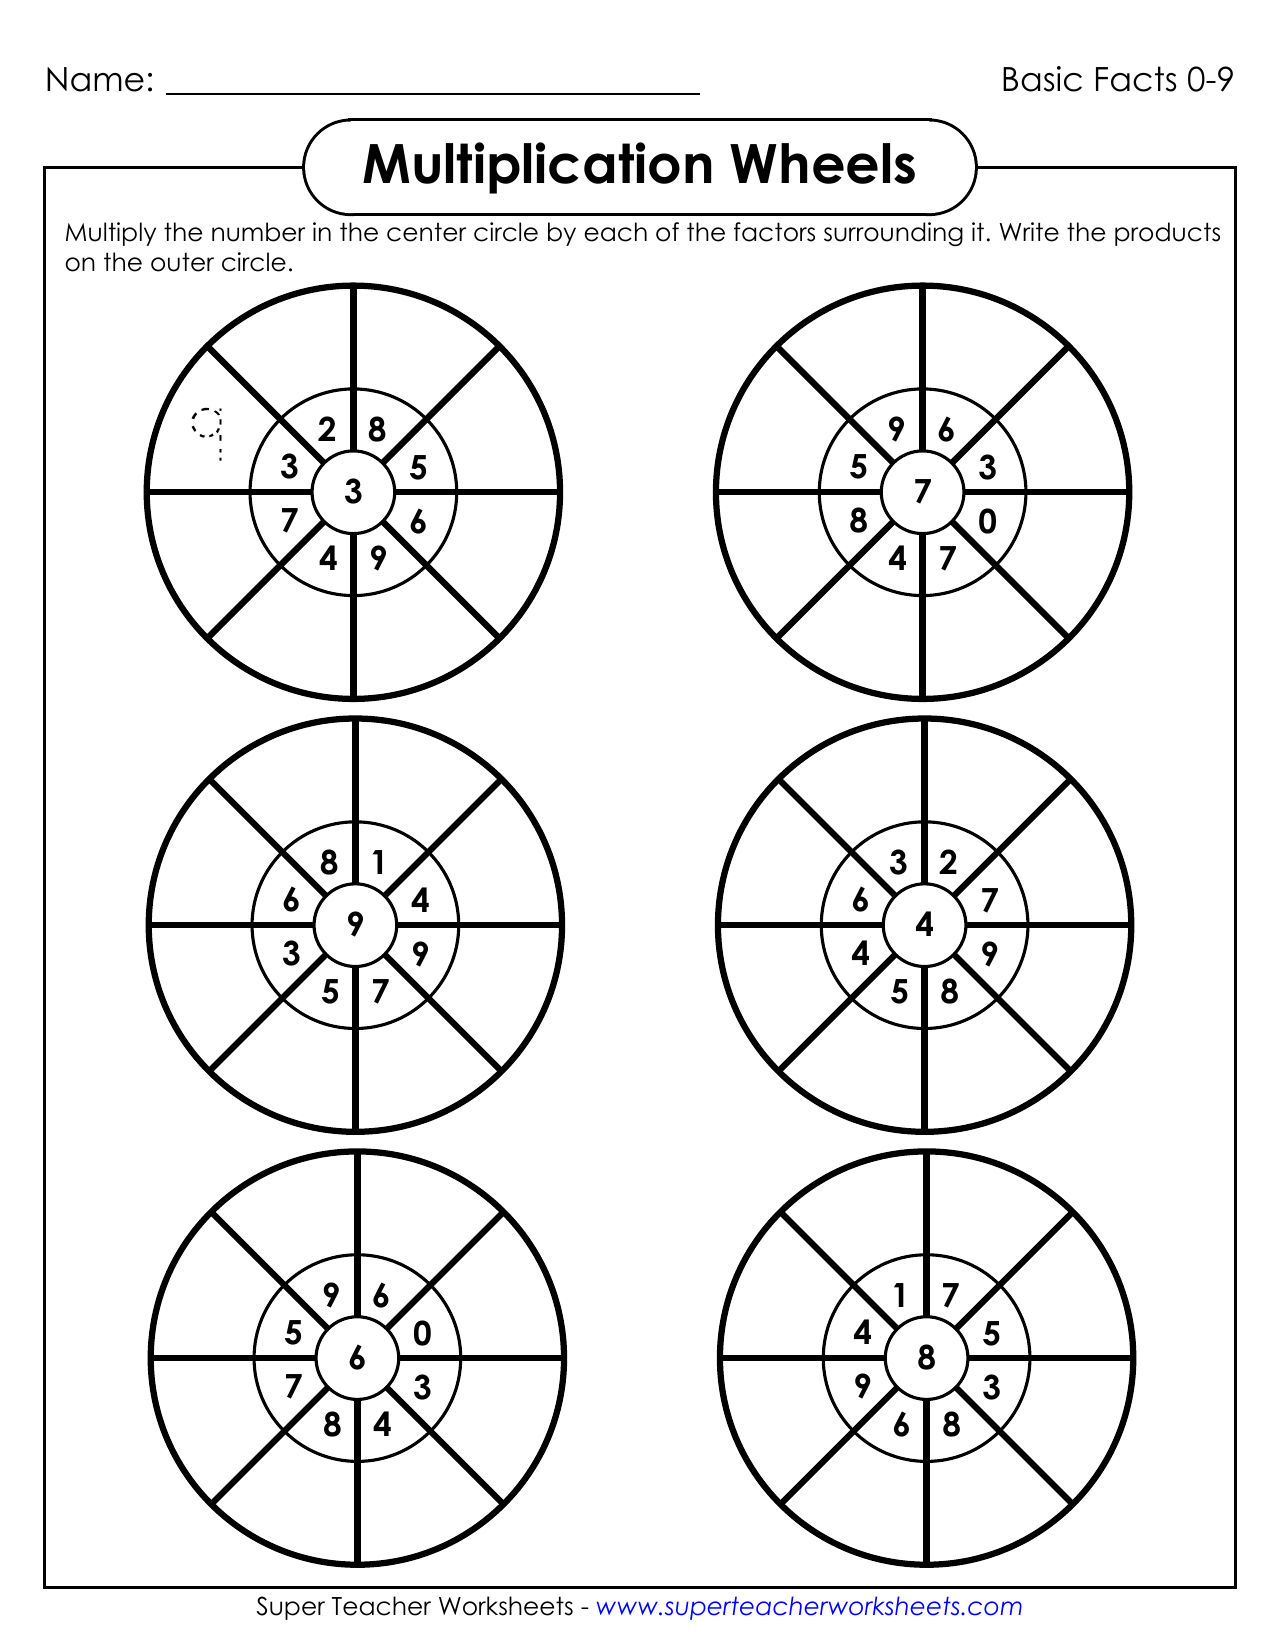 printable-multiplication-wheels-printablemultiplication